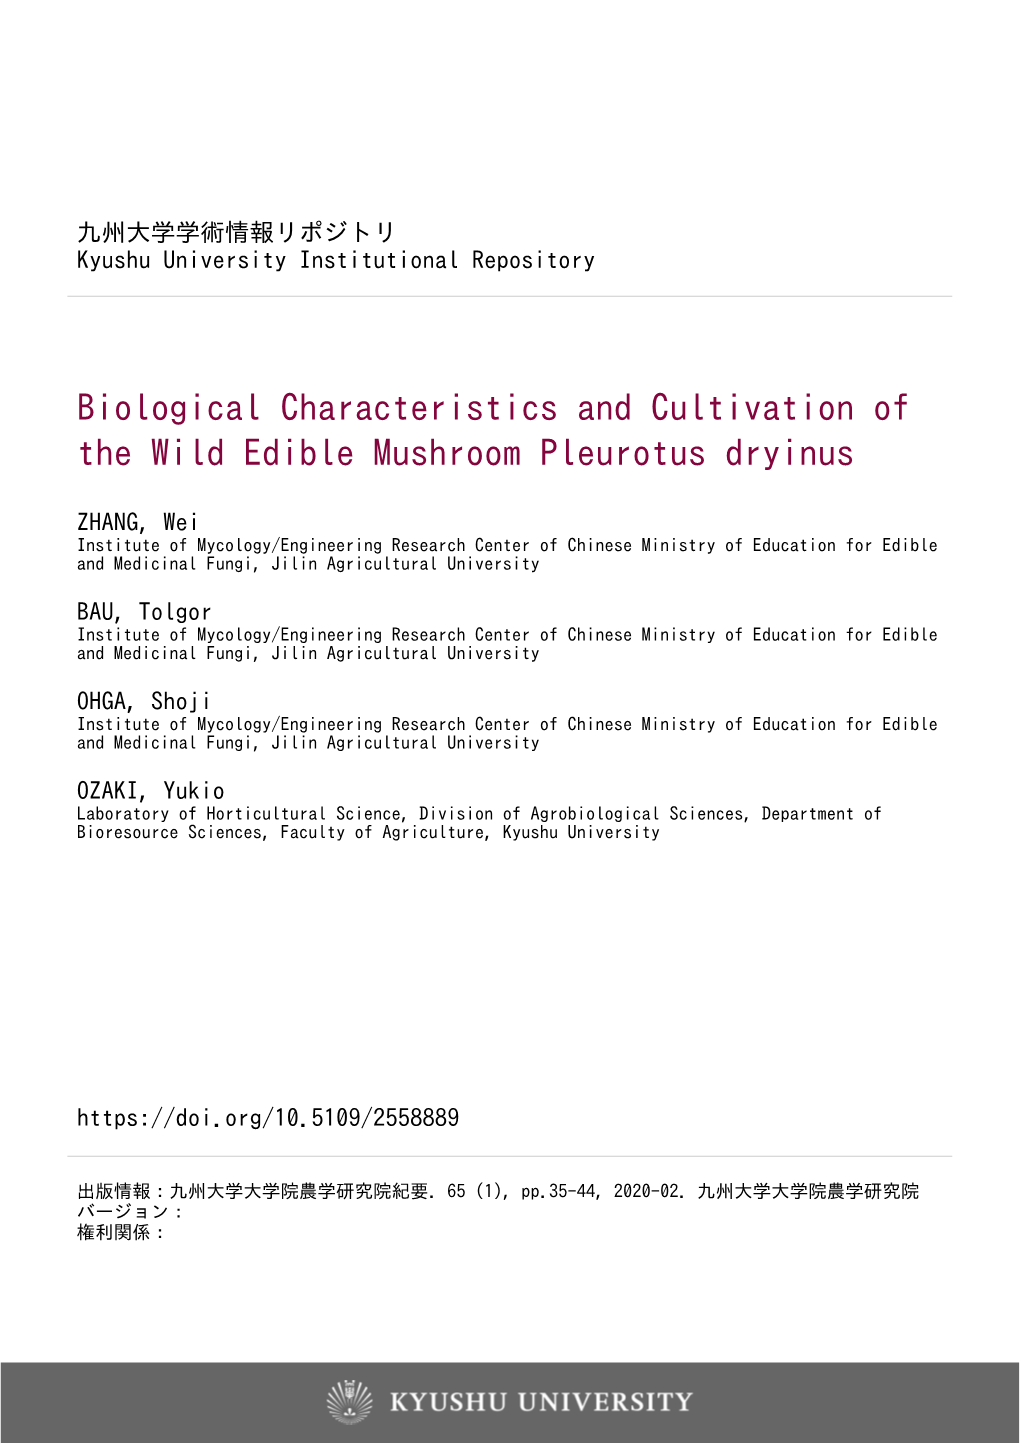 Biological Characteristics and Cultivation of the Wild Edible Mushroom Pleurotus Dryinus